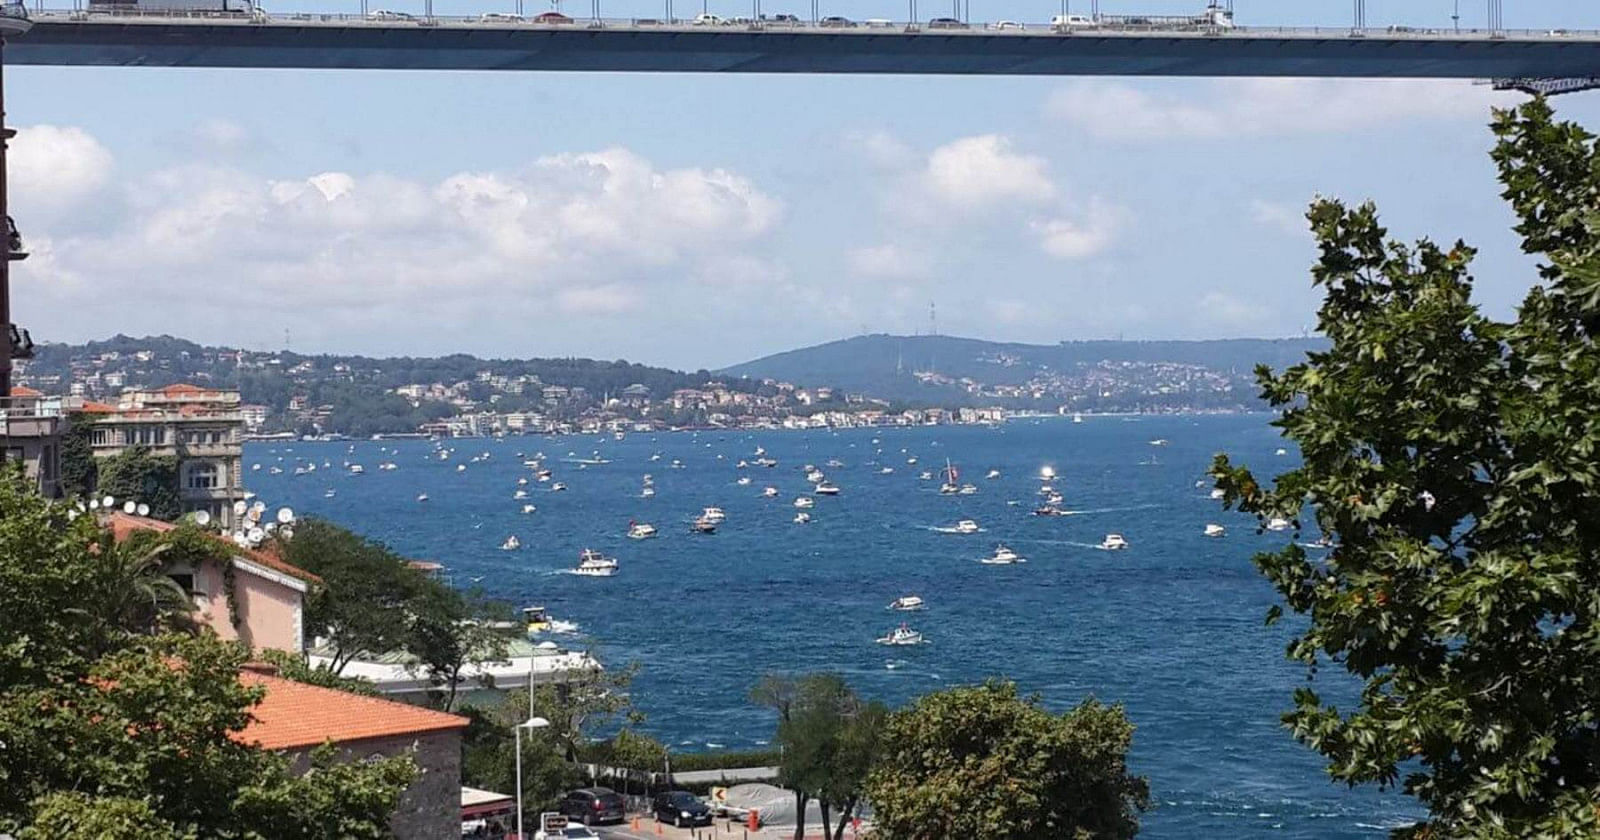 Hyr en båt i İstanbul